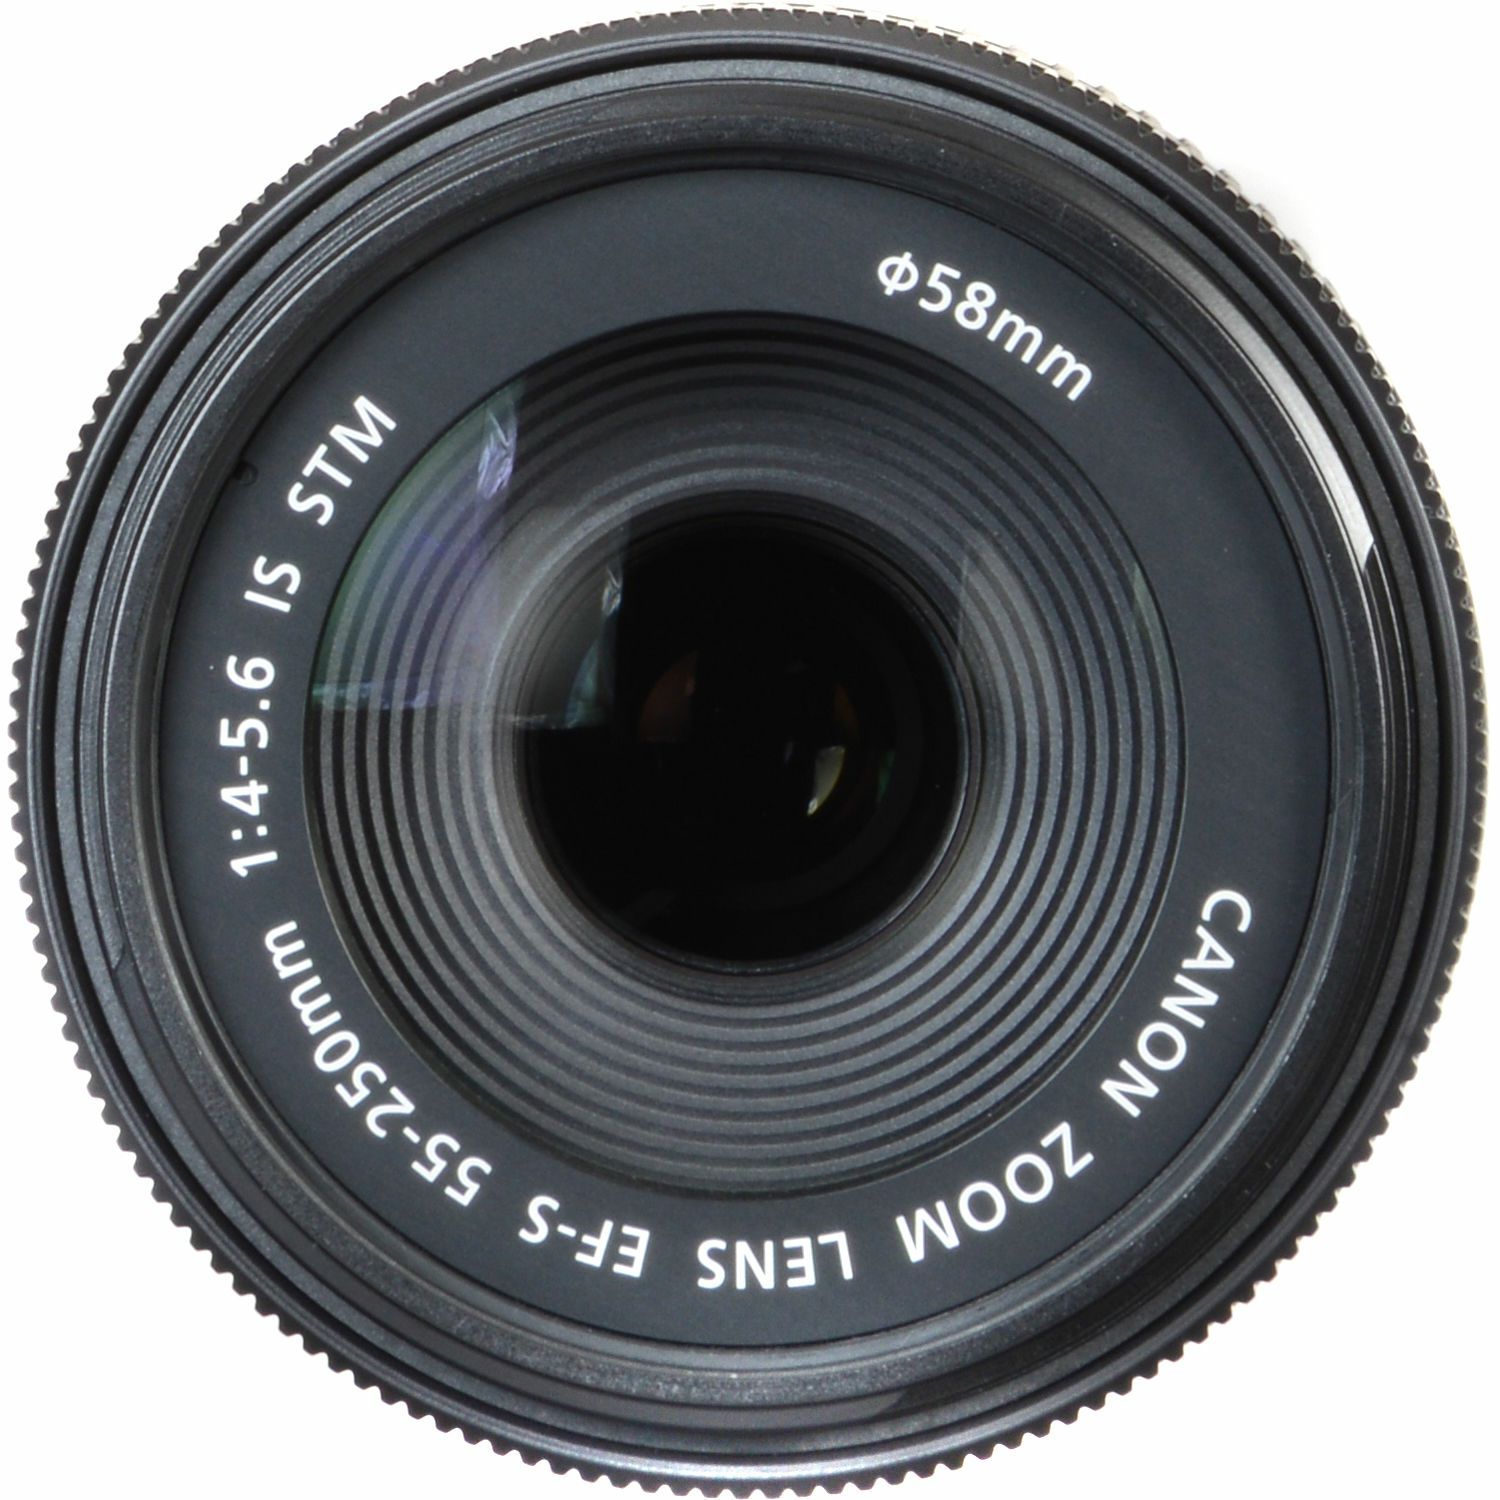 Canon EF-S 55-250 IS STM telefoto objektiv zoom lens 55-250mm 4-5.6 f/4-5.6 (8546B005AA) (bulk)